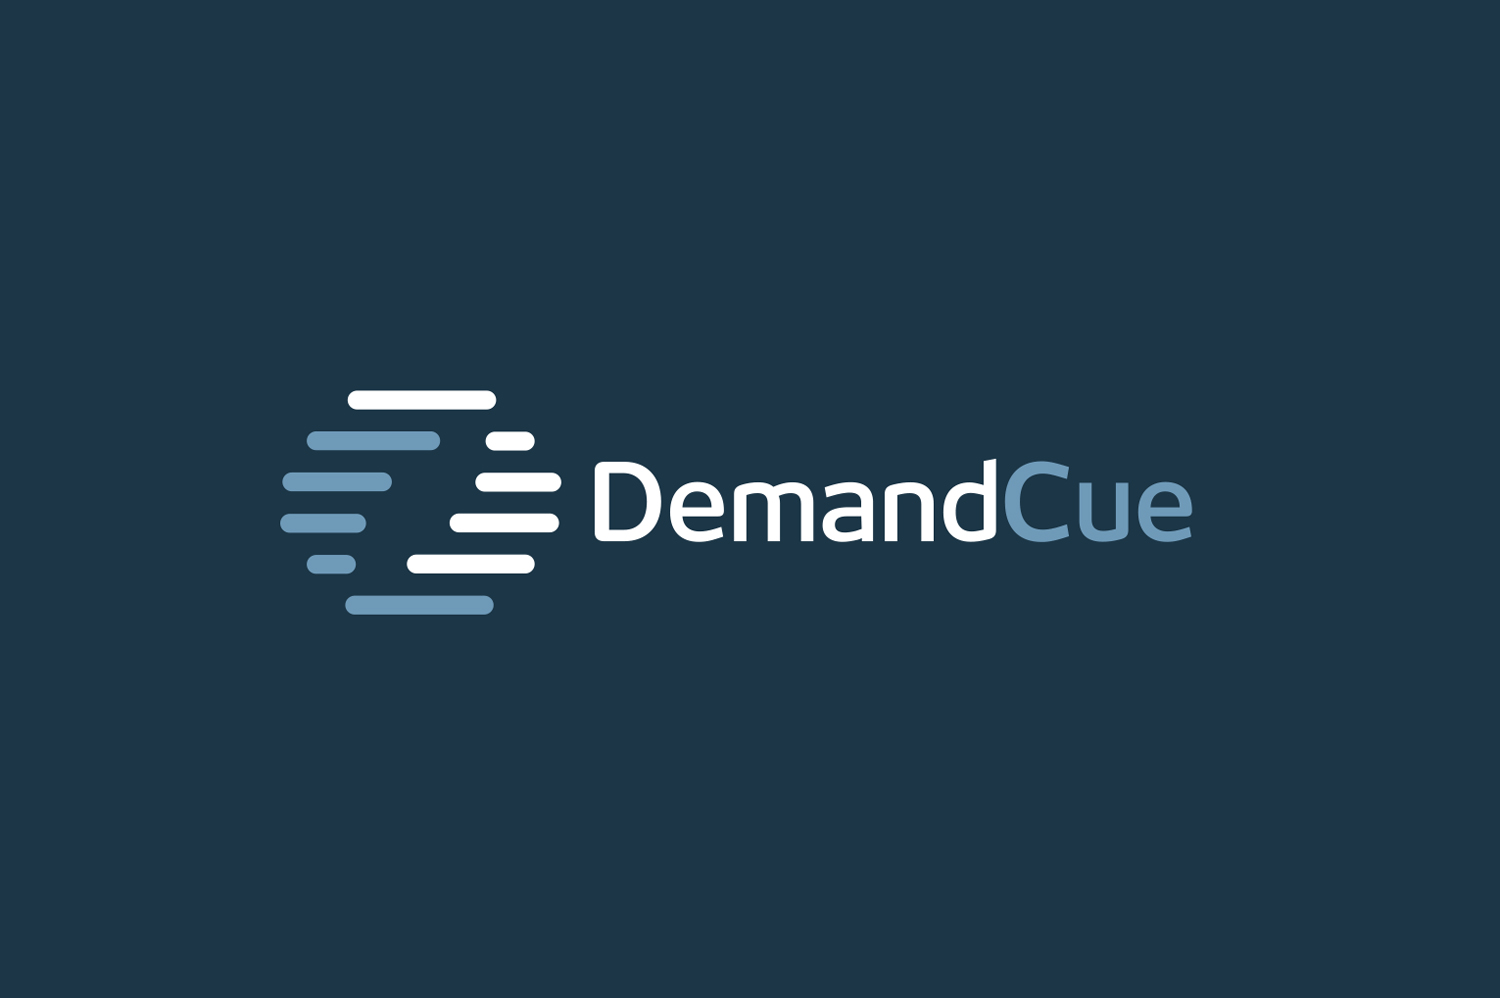 DemandCue logo design